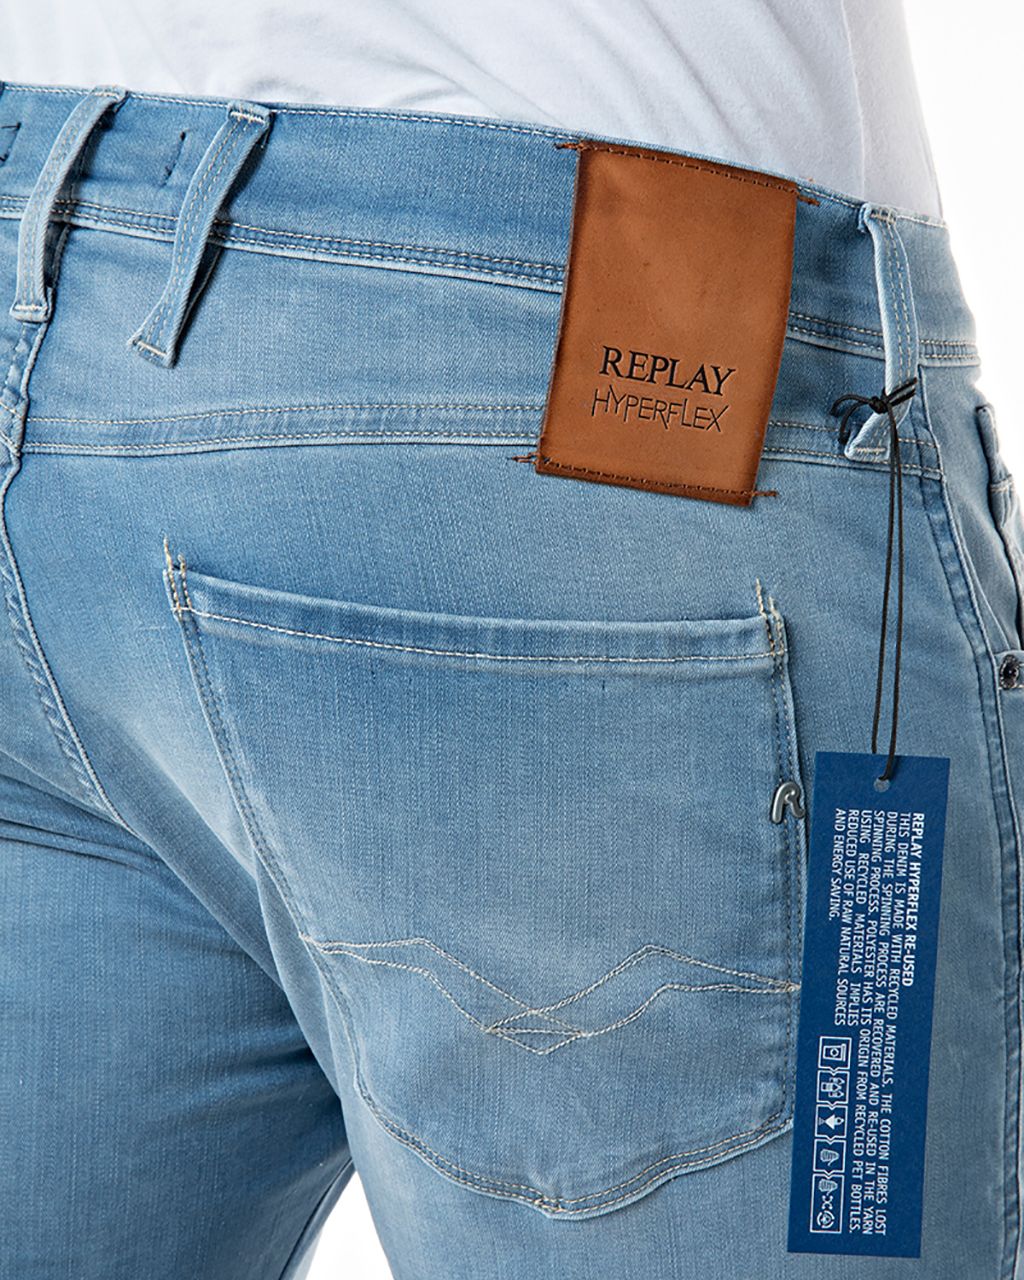 Begunstigde ik heb honger Couscous Replay Anbass Hyperflex Re-used X-lite Jeans | Shop nu - Only for Men